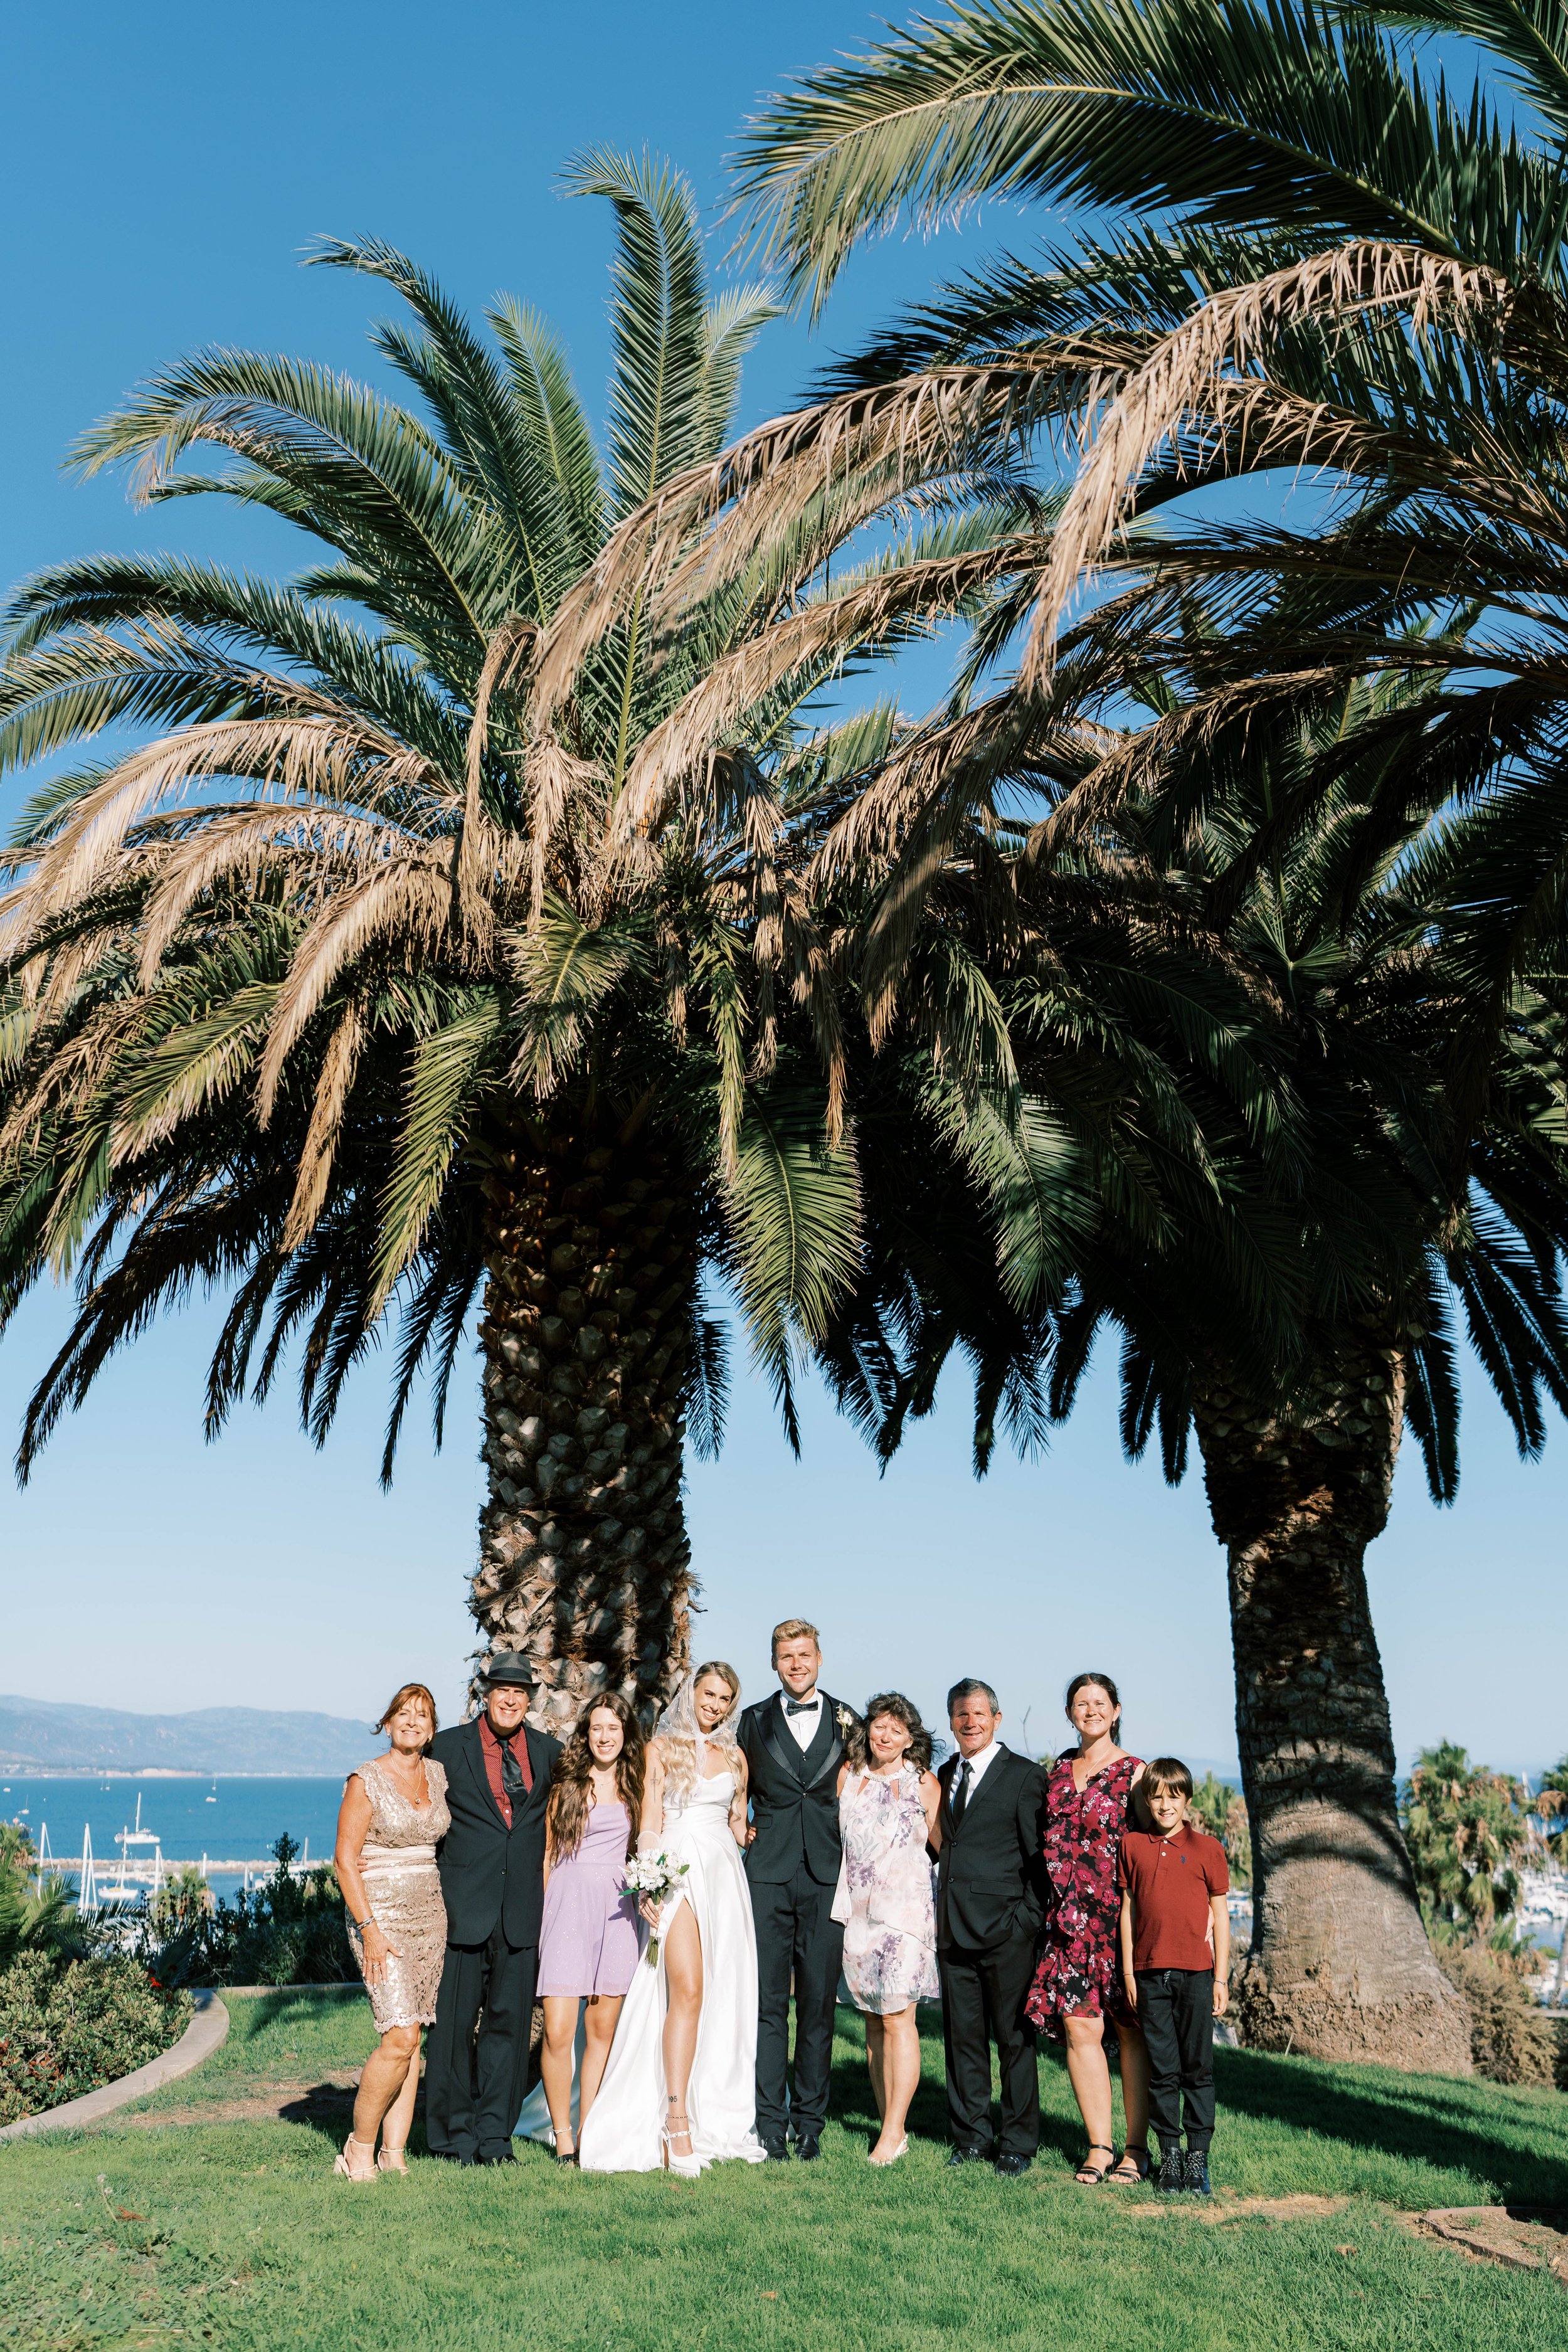 www.santabarbarawedding.com | Santa Barbara City College | Winslow Maxwell Overlook | Parker Strehlow | Michael Ambrozewicz | Nora Ambrozewicz | Couple with Friends and Family